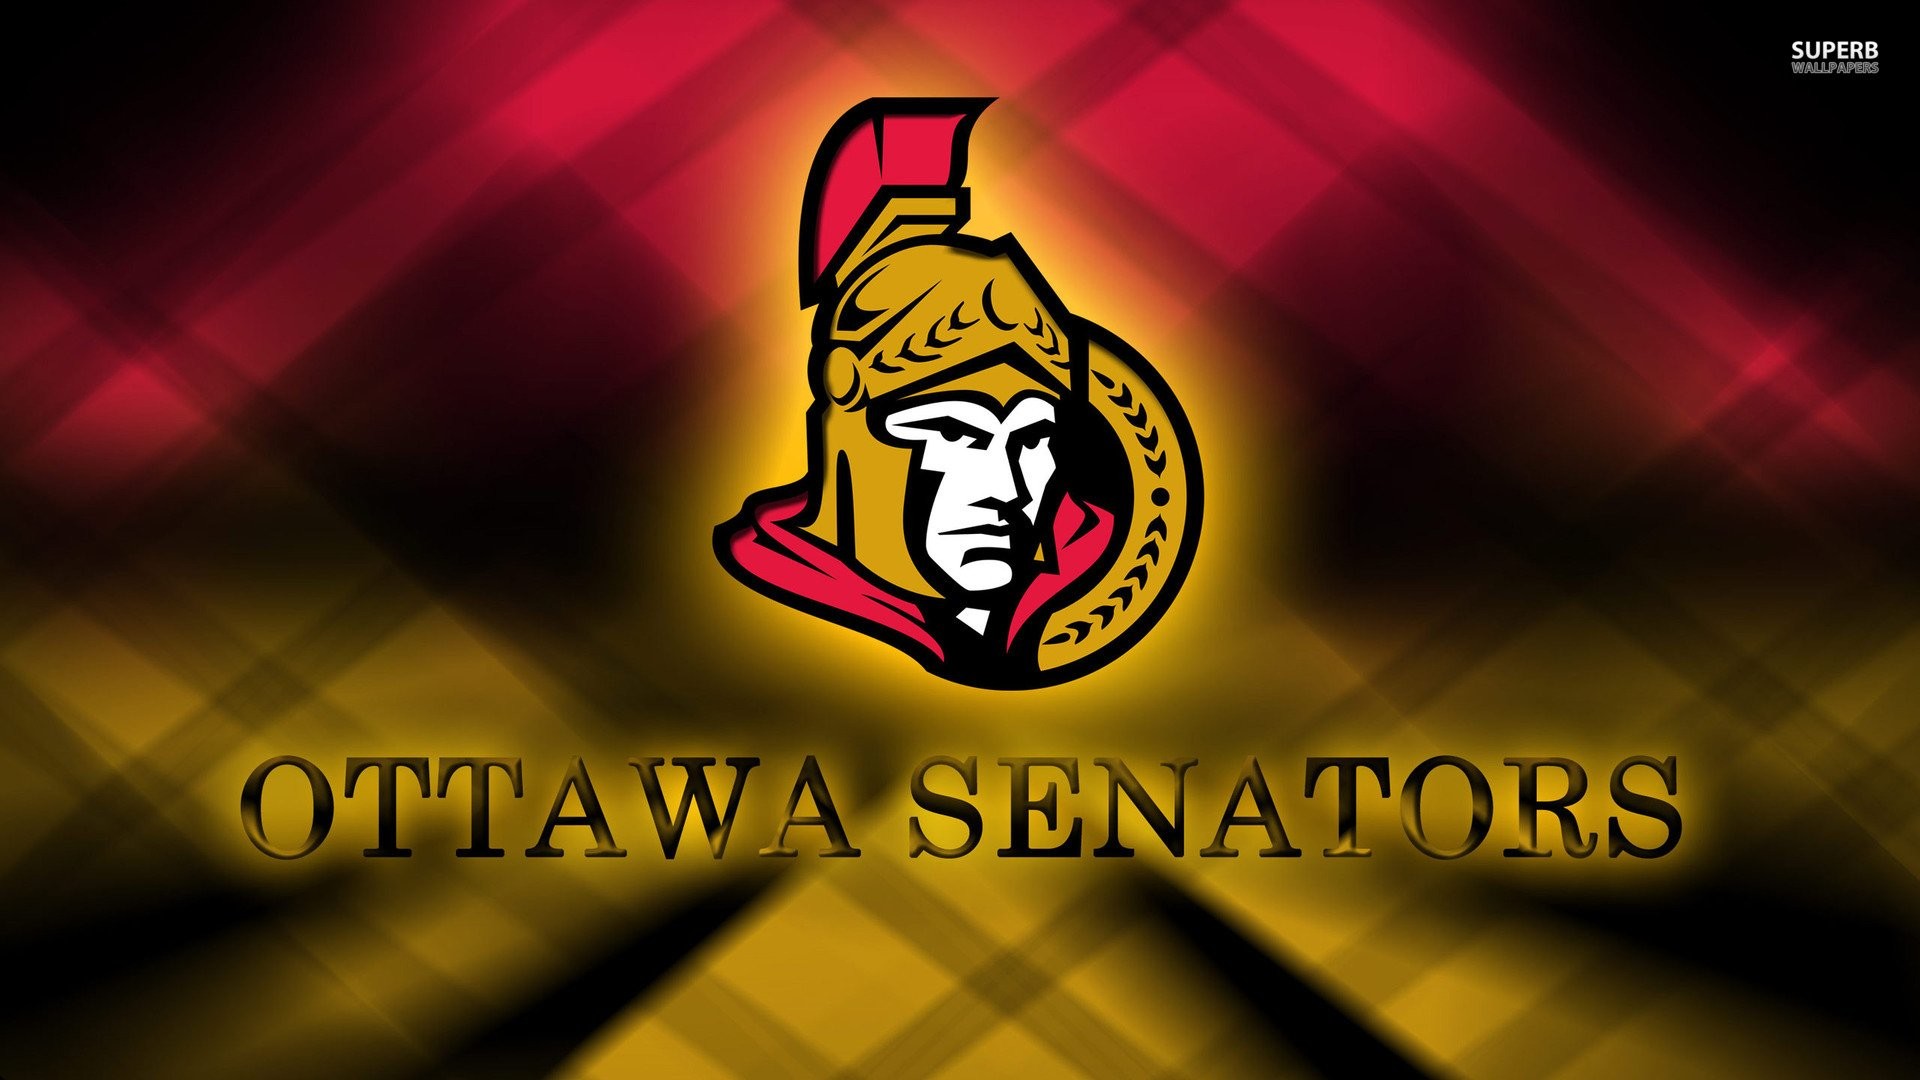 1920x1080 UQI233: Ottawa Senators,  px, by Cathie Pauly